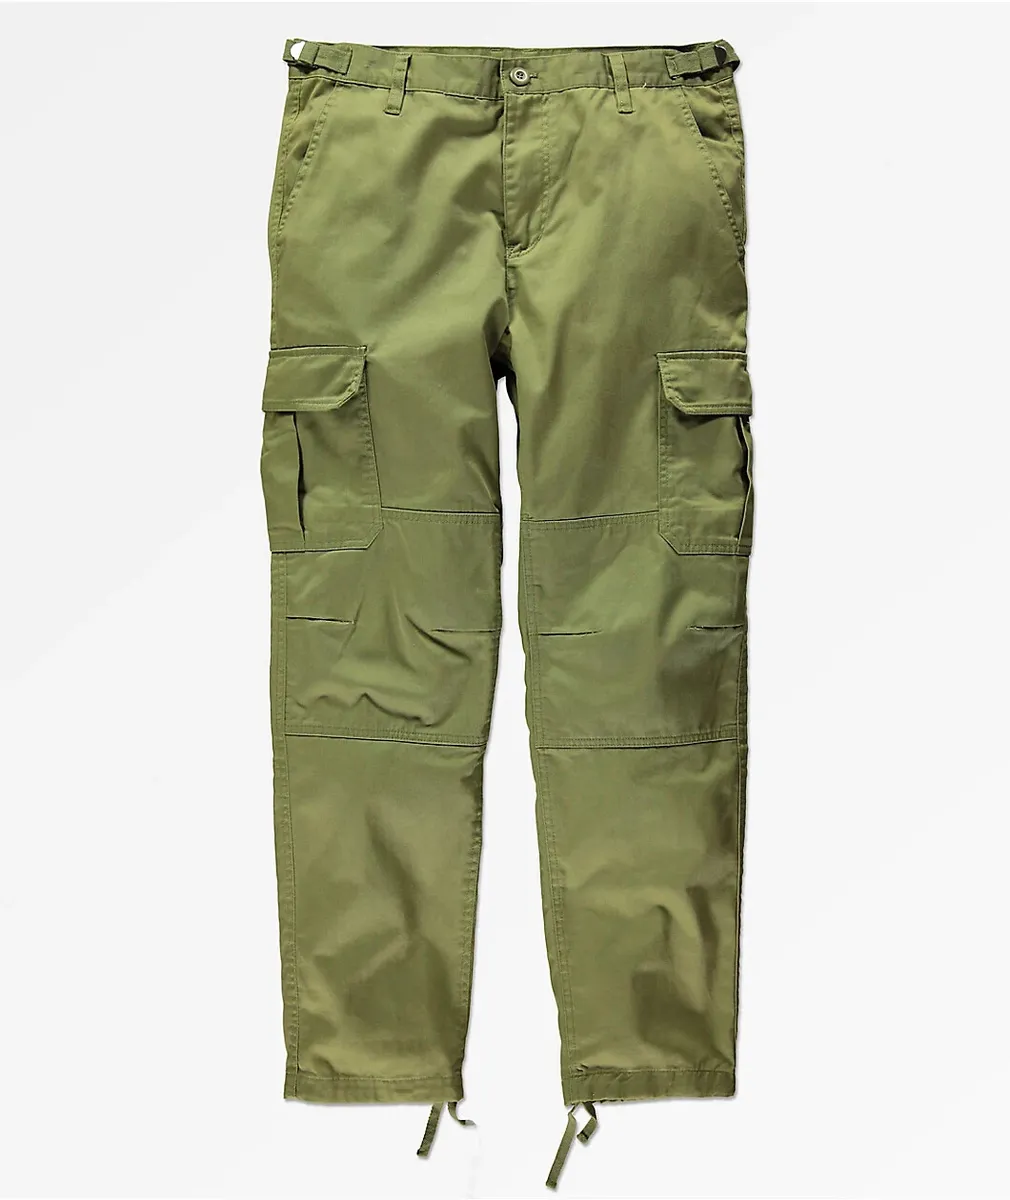 Empyre Men's Loose Fit Khaki Cargo Olive Pants Size 34 X 29 NWT